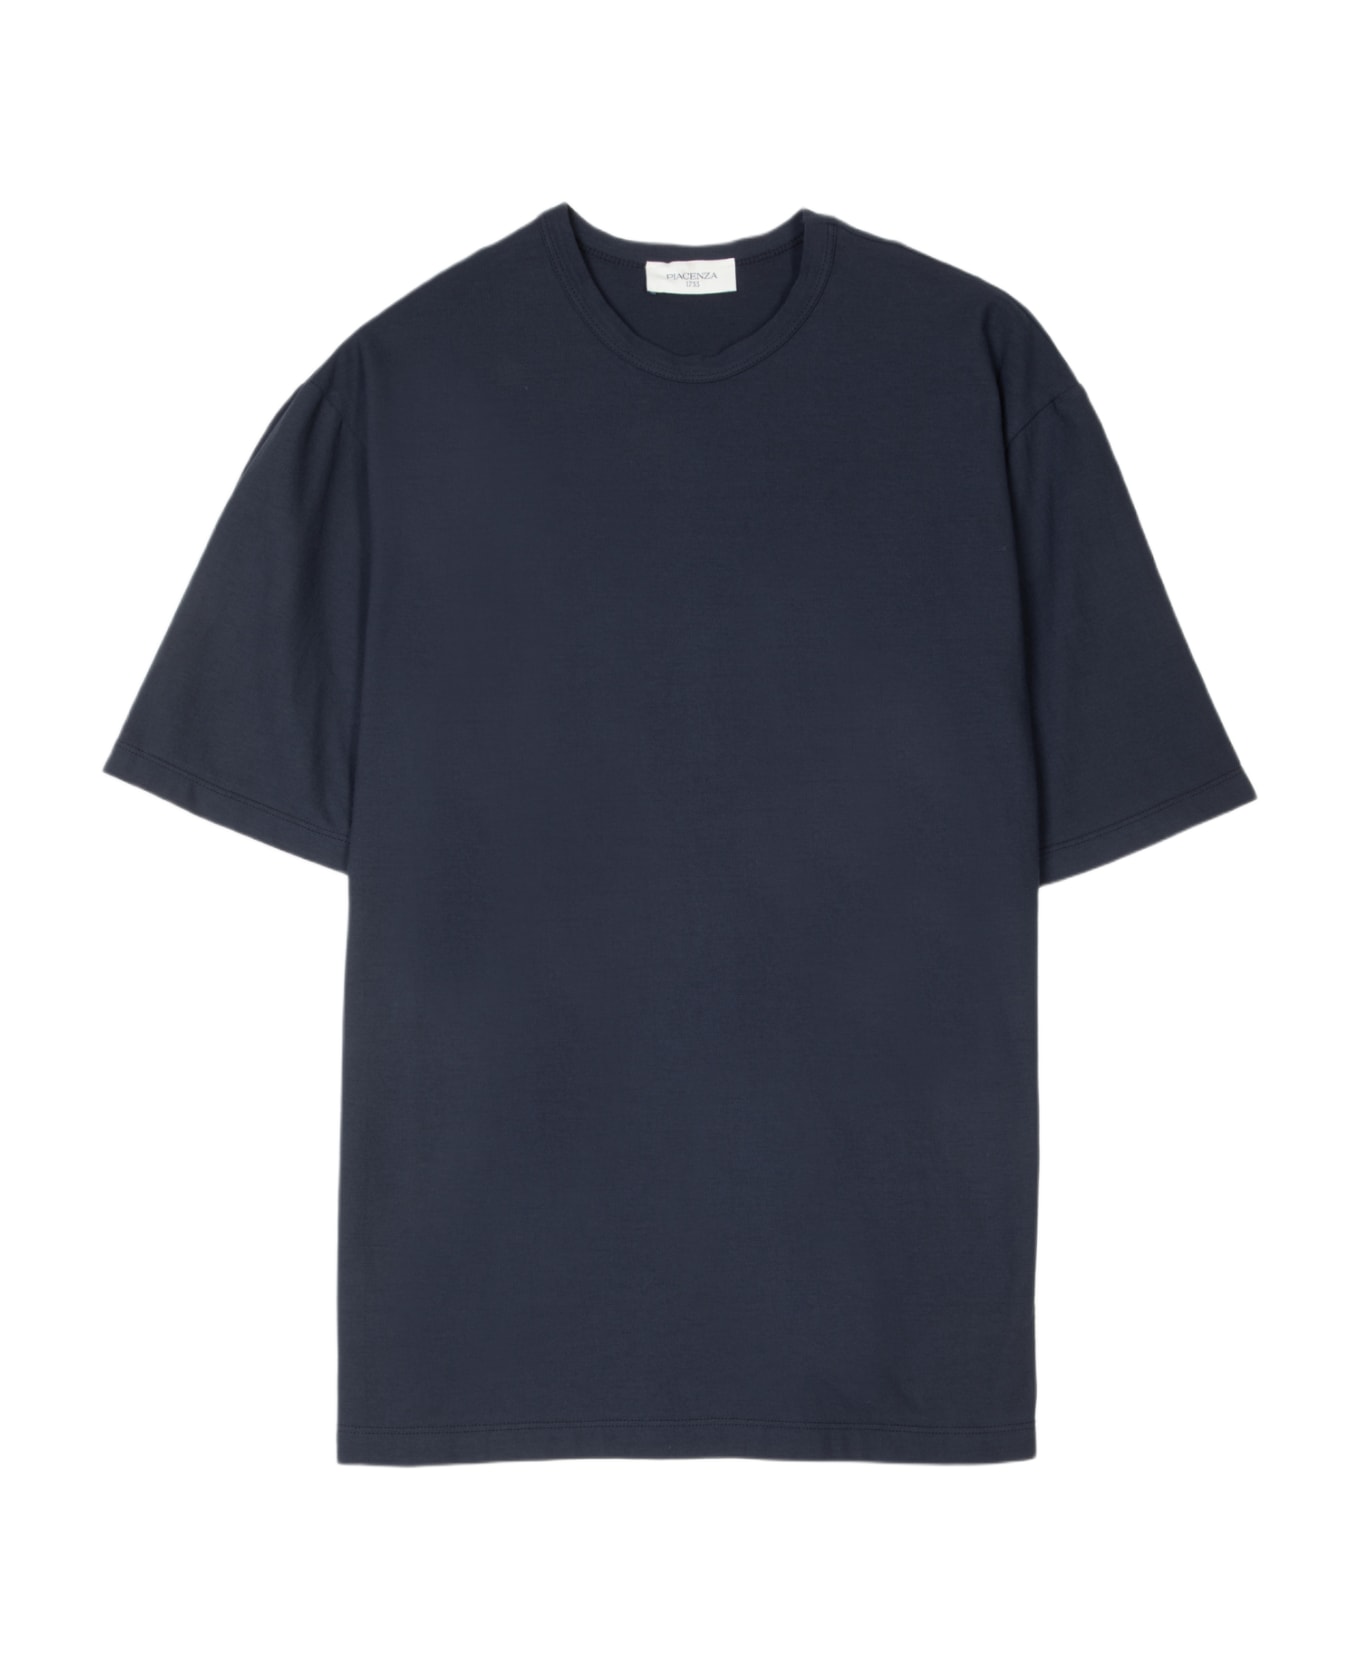 Piacenza Cashmere T-shirt Dark blue lightweight cotton t-shirt - Blu scuro シャツ